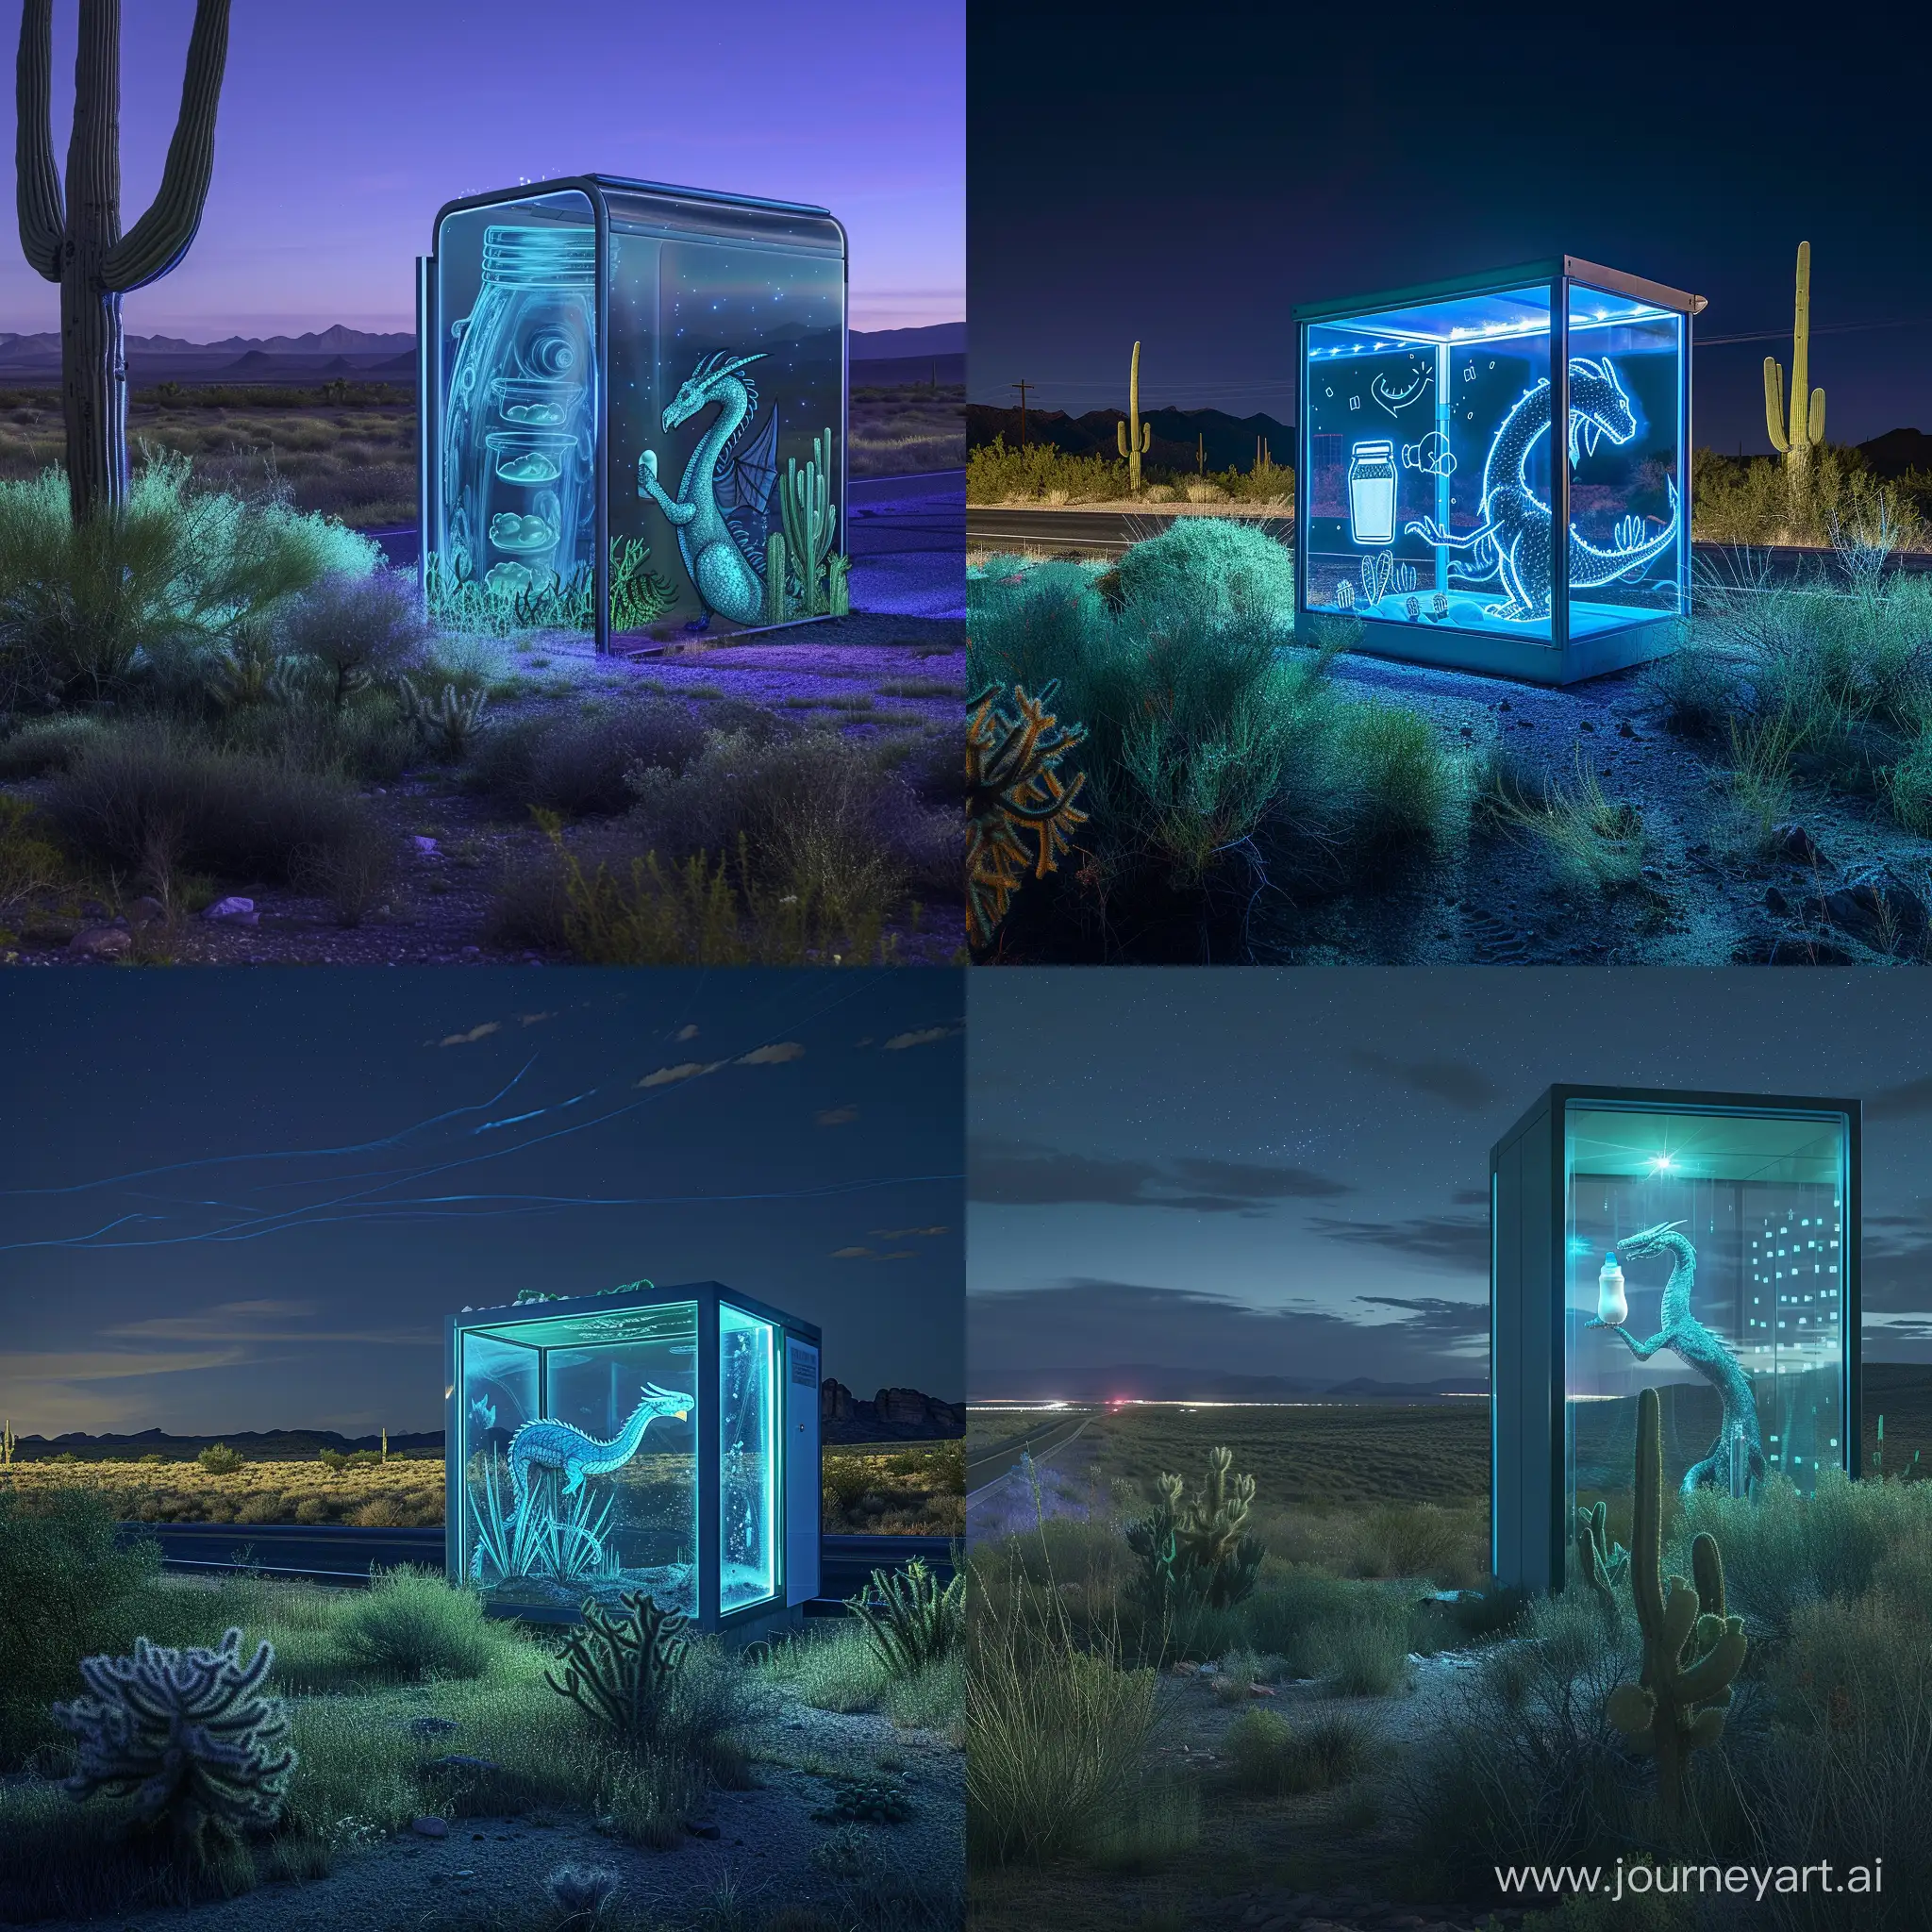 Nighttime-Desert-Kiosk-Illuminated-Glass-Structure-with-YogurtClutching-Dragon